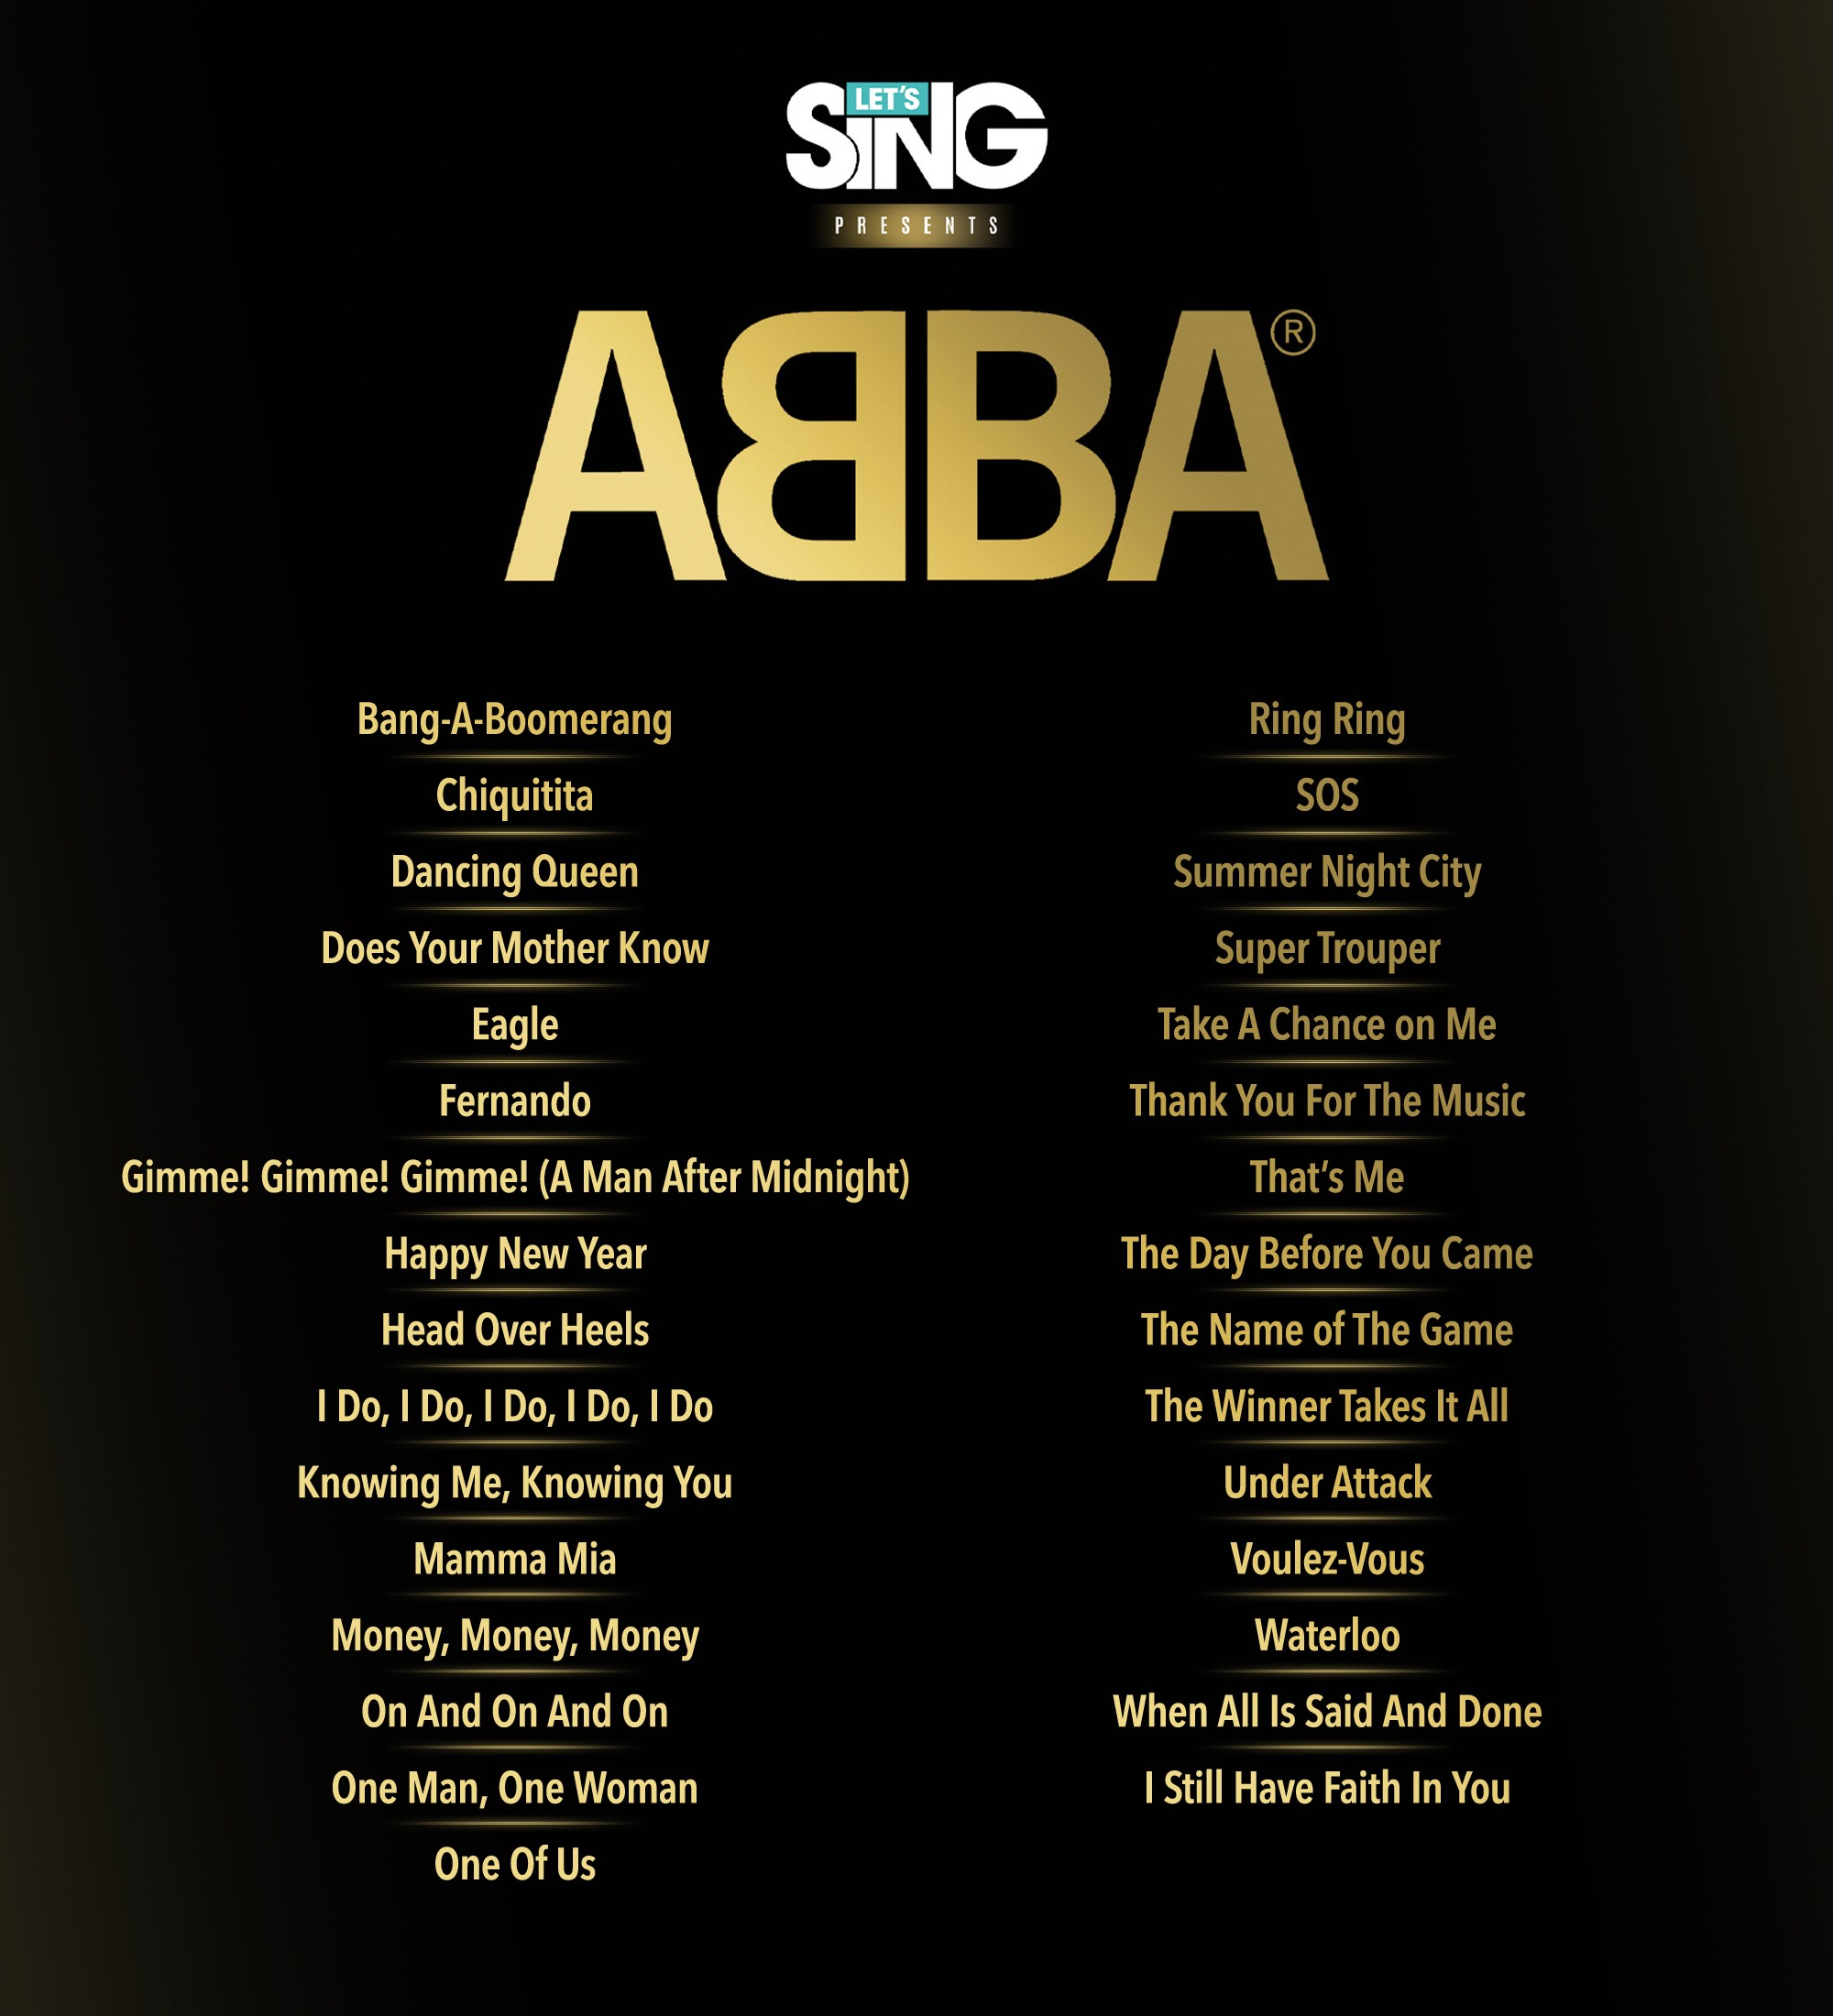 Lets Sing presents ABBA canciones